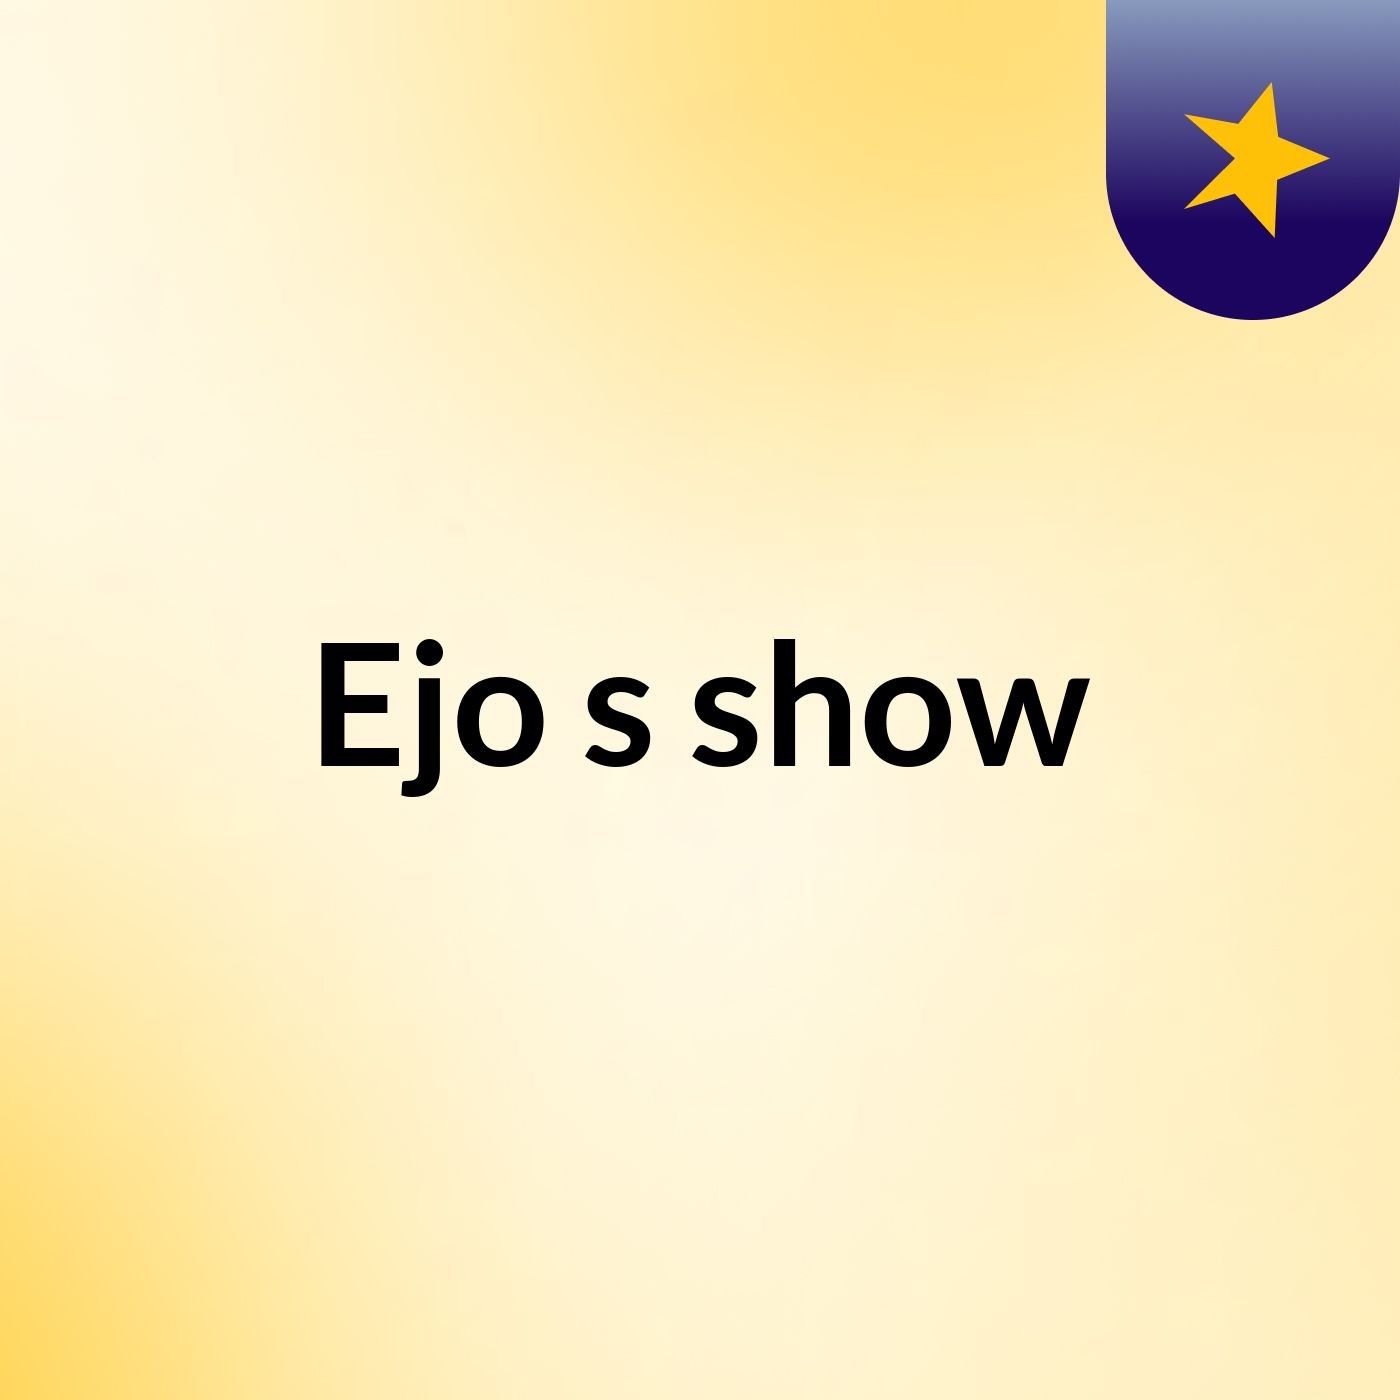 Ejo's show